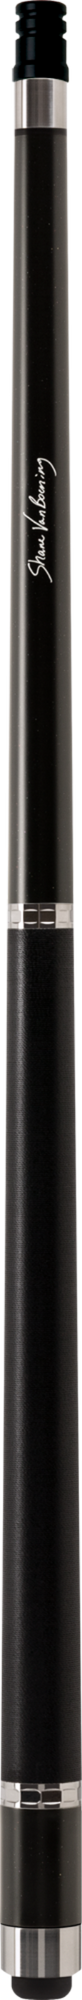 Cuetec Cynergy Black Sparkle SVB - 11.8 or 12.5 mm Pool Cue